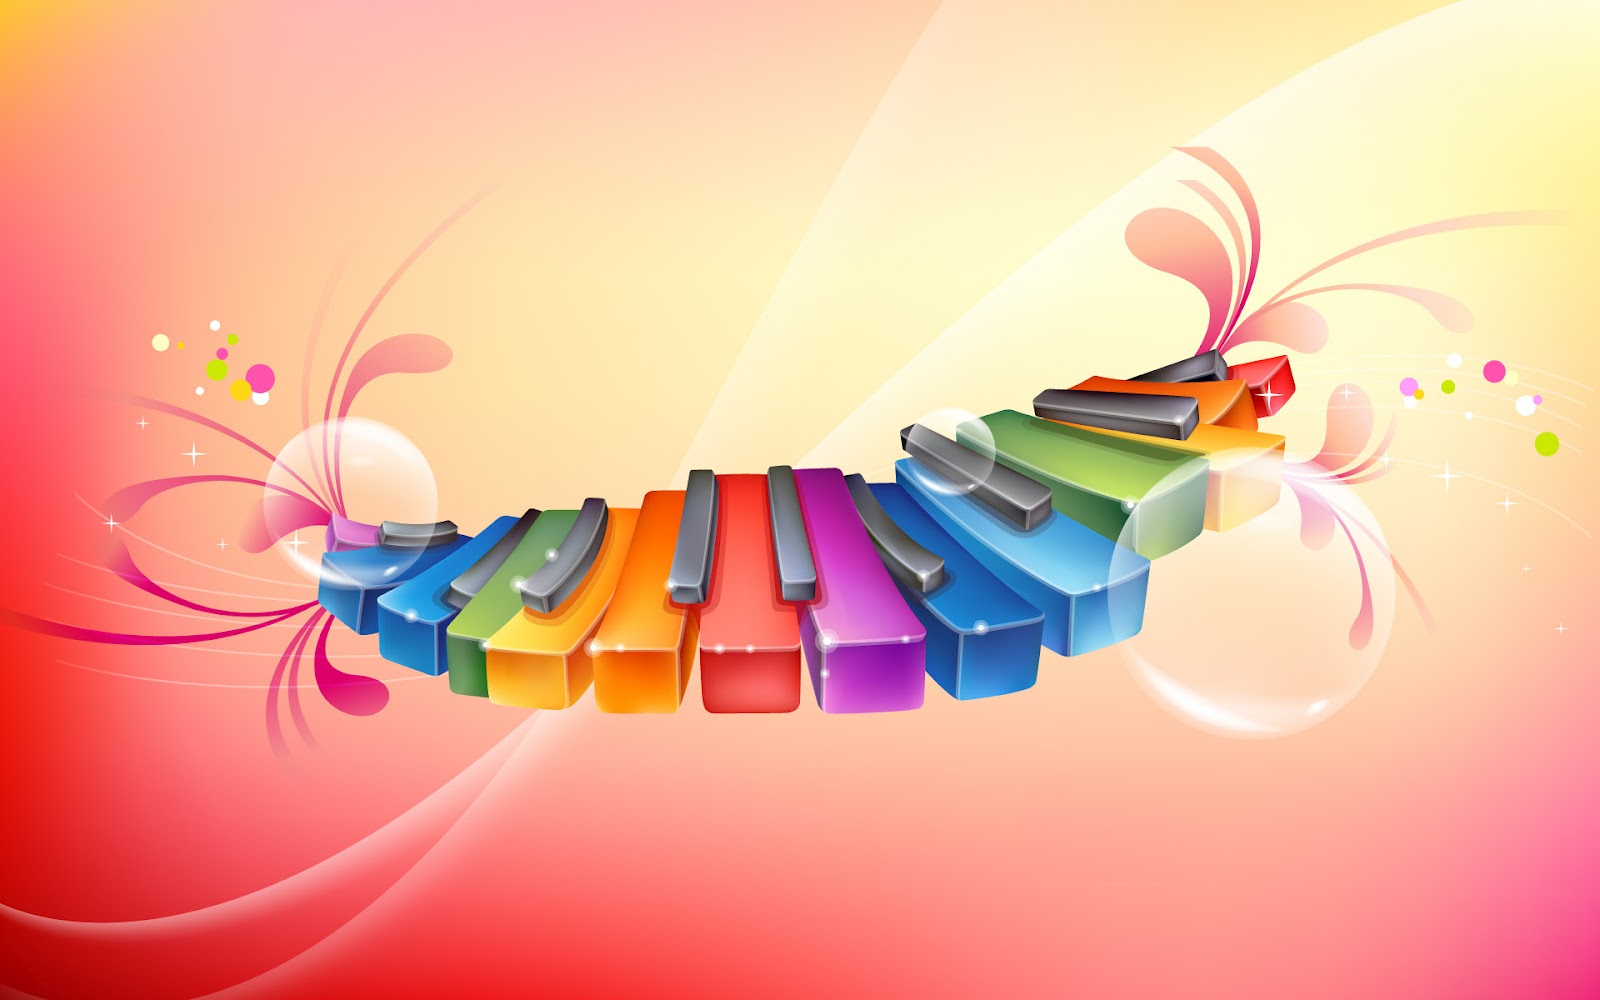 https://blogger.googleusercontent.com/img/b/R29vZ2xl/AVvXsEicCwpcVl8IdFDW0m7dpIdSYIHWPRtNkug2I4xdDcPZUxhIGFYaZYIPZWf0QTCfkDD4piItlzoBNhsZNfuq7XHgkQ9HBnrKBjtI5V8Mcej1hp8CayGc0ji04ievfpEkoPFX-GykepEeTEI/s1600/best-full-colours-Piano-wallpapers-2012.jpg